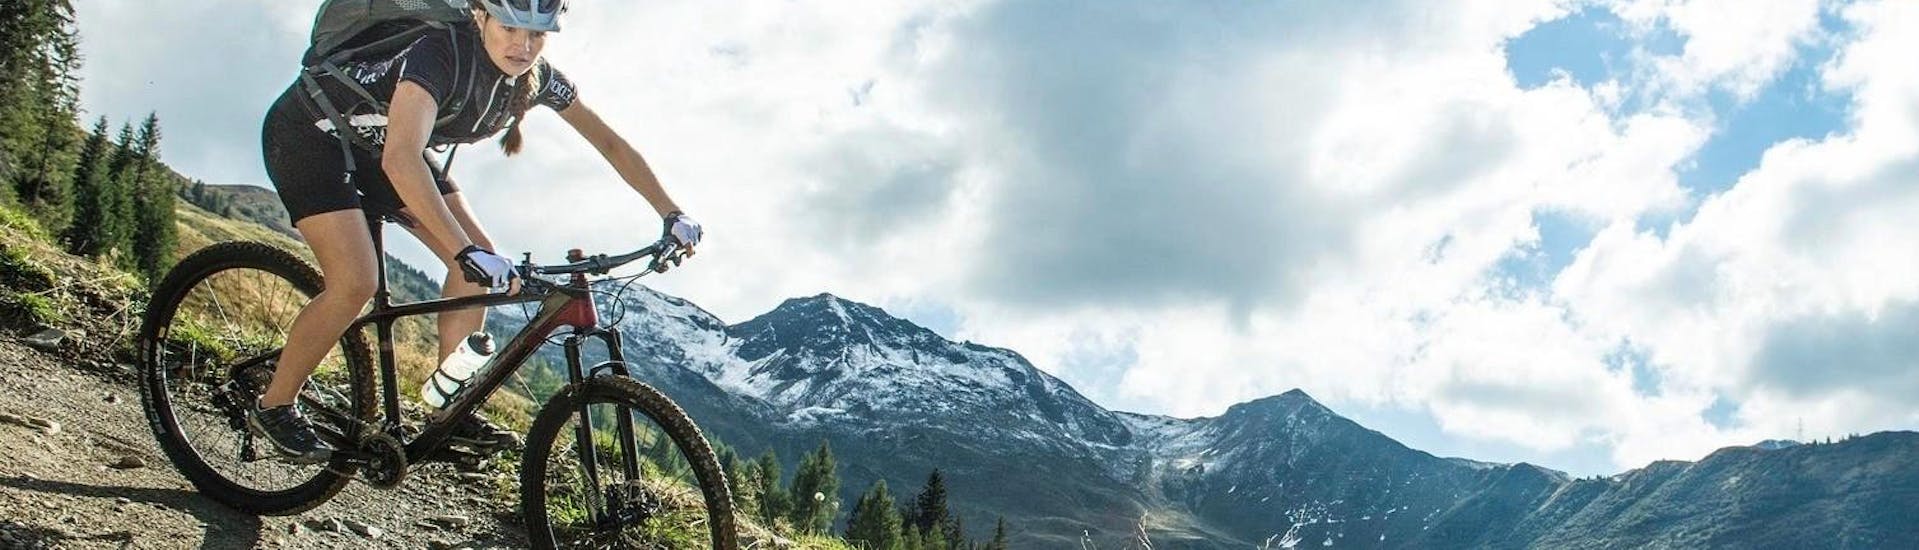 E-bike Hire in Crans Montana with Intersport Zermatten.  